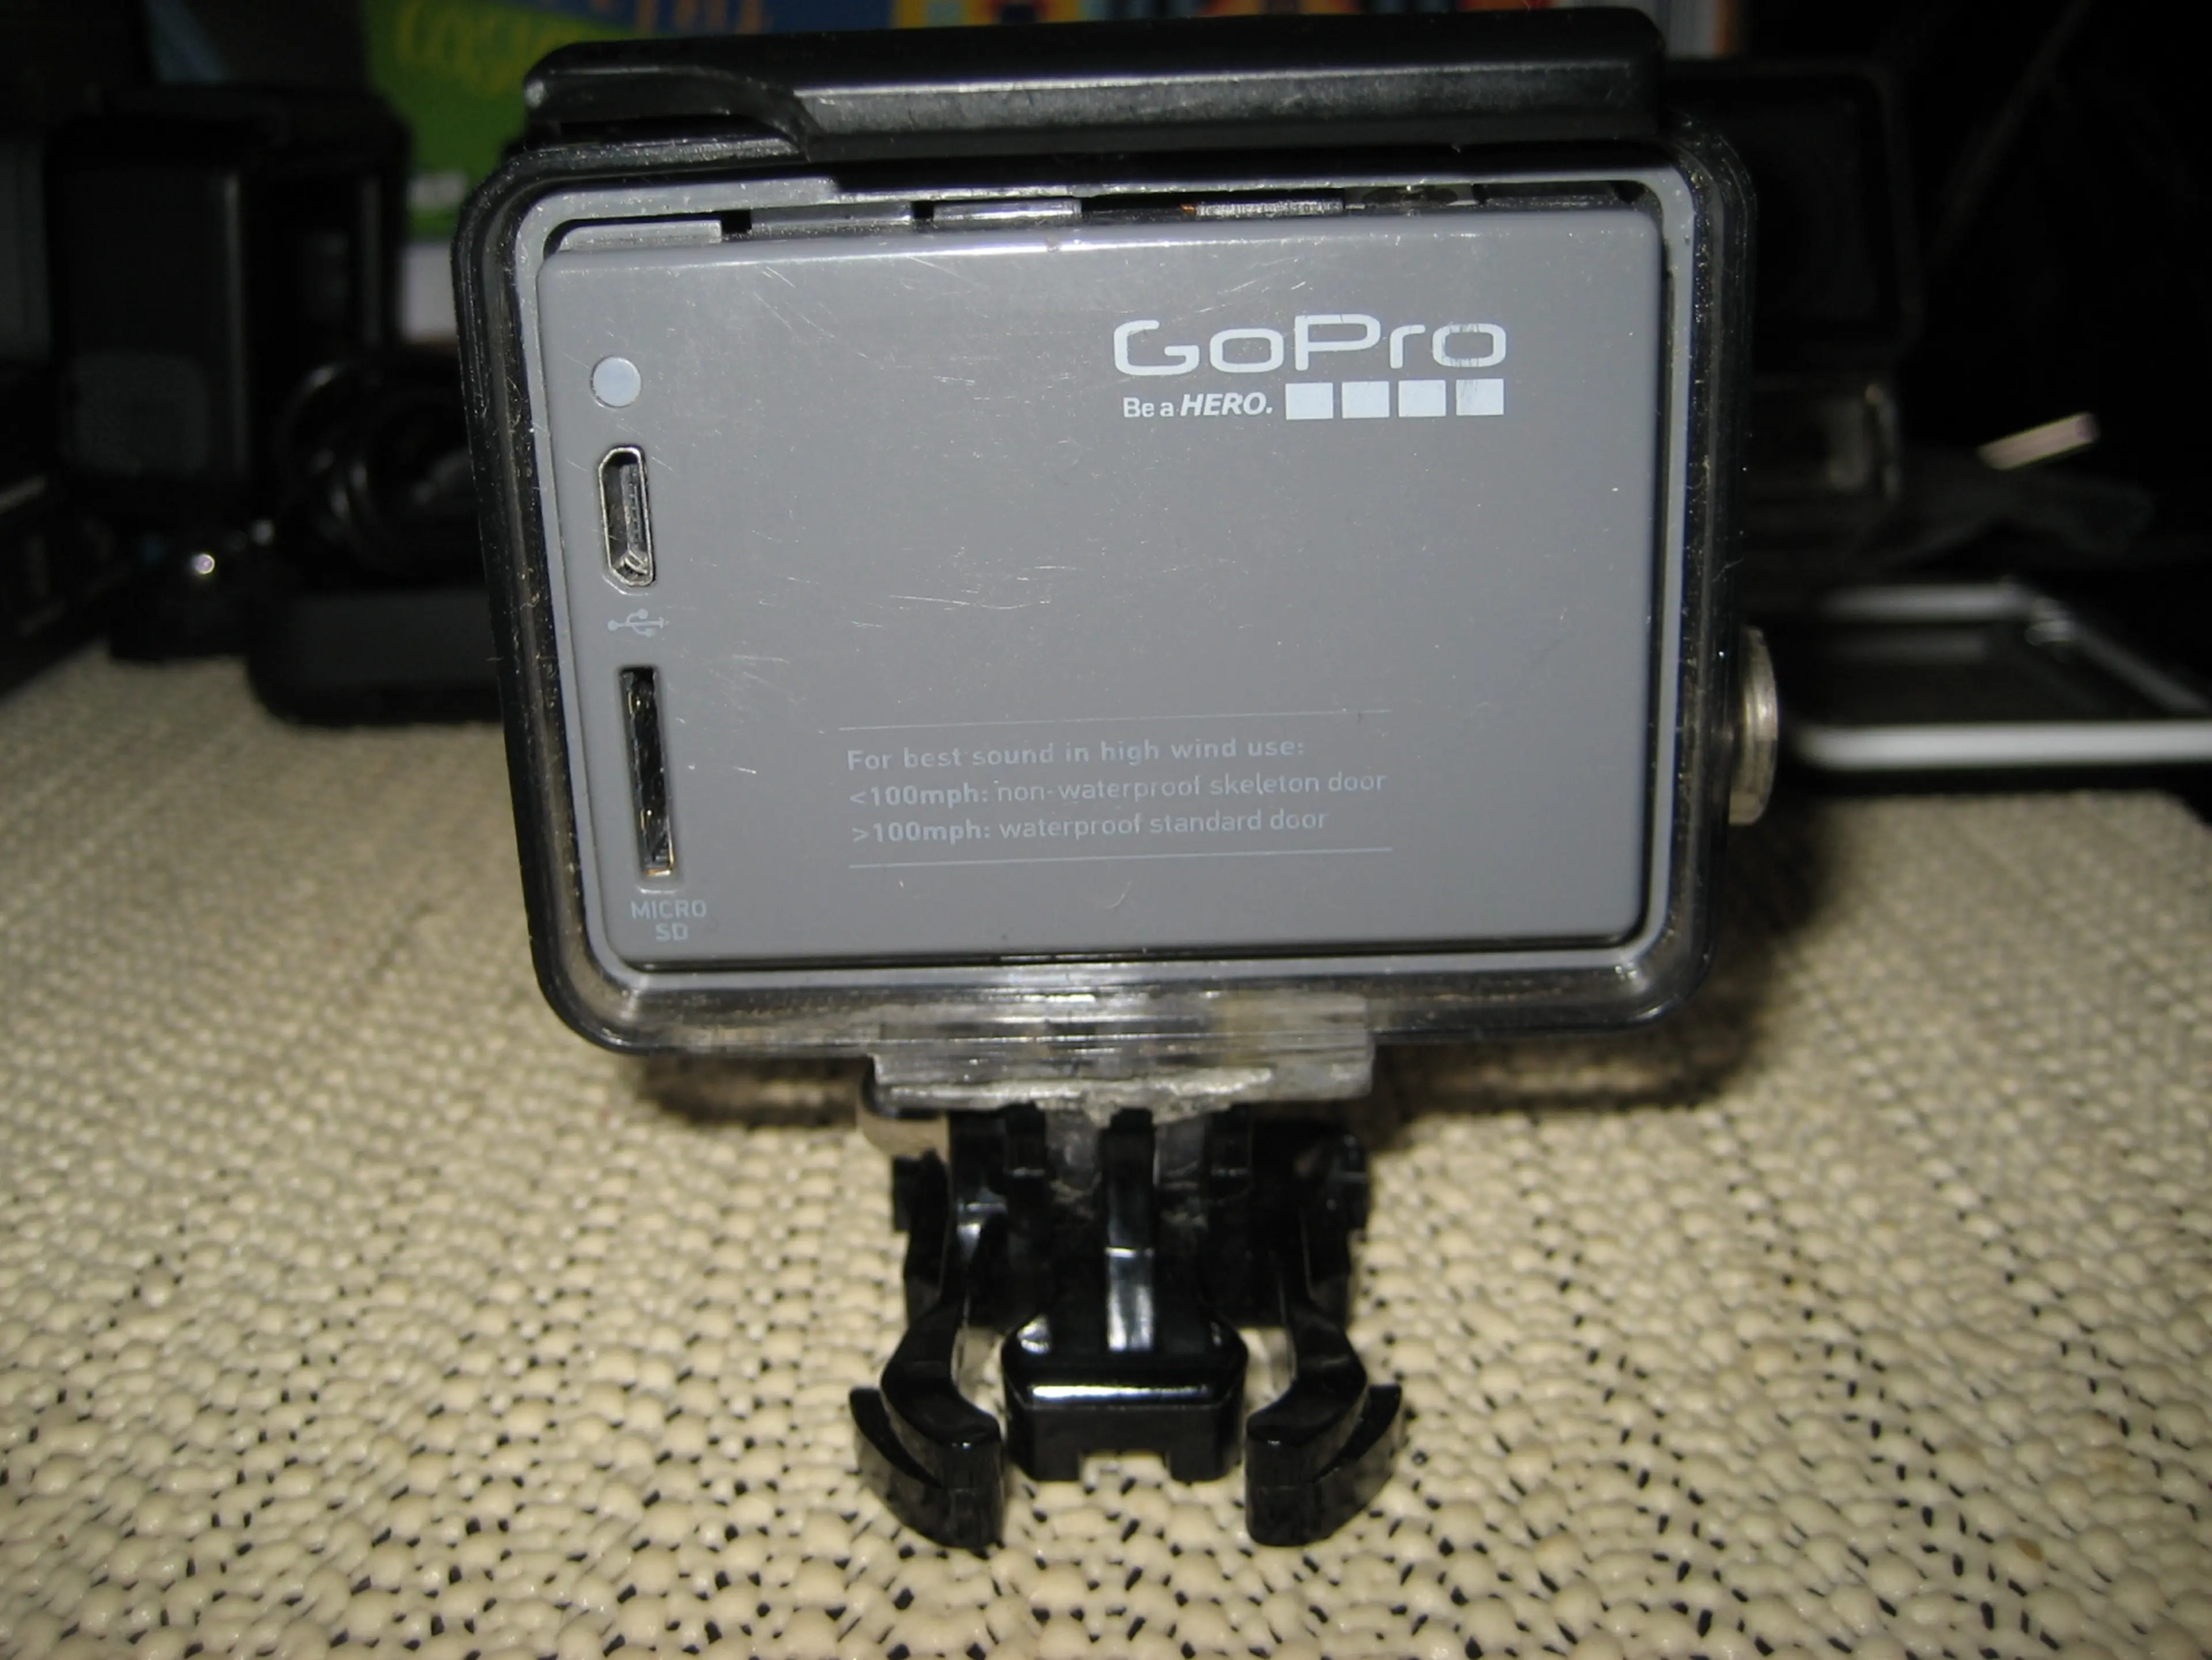 6. Camera actiune GoPro Hero+ ( model 2015) Full HD, Bluetooth + WiFi